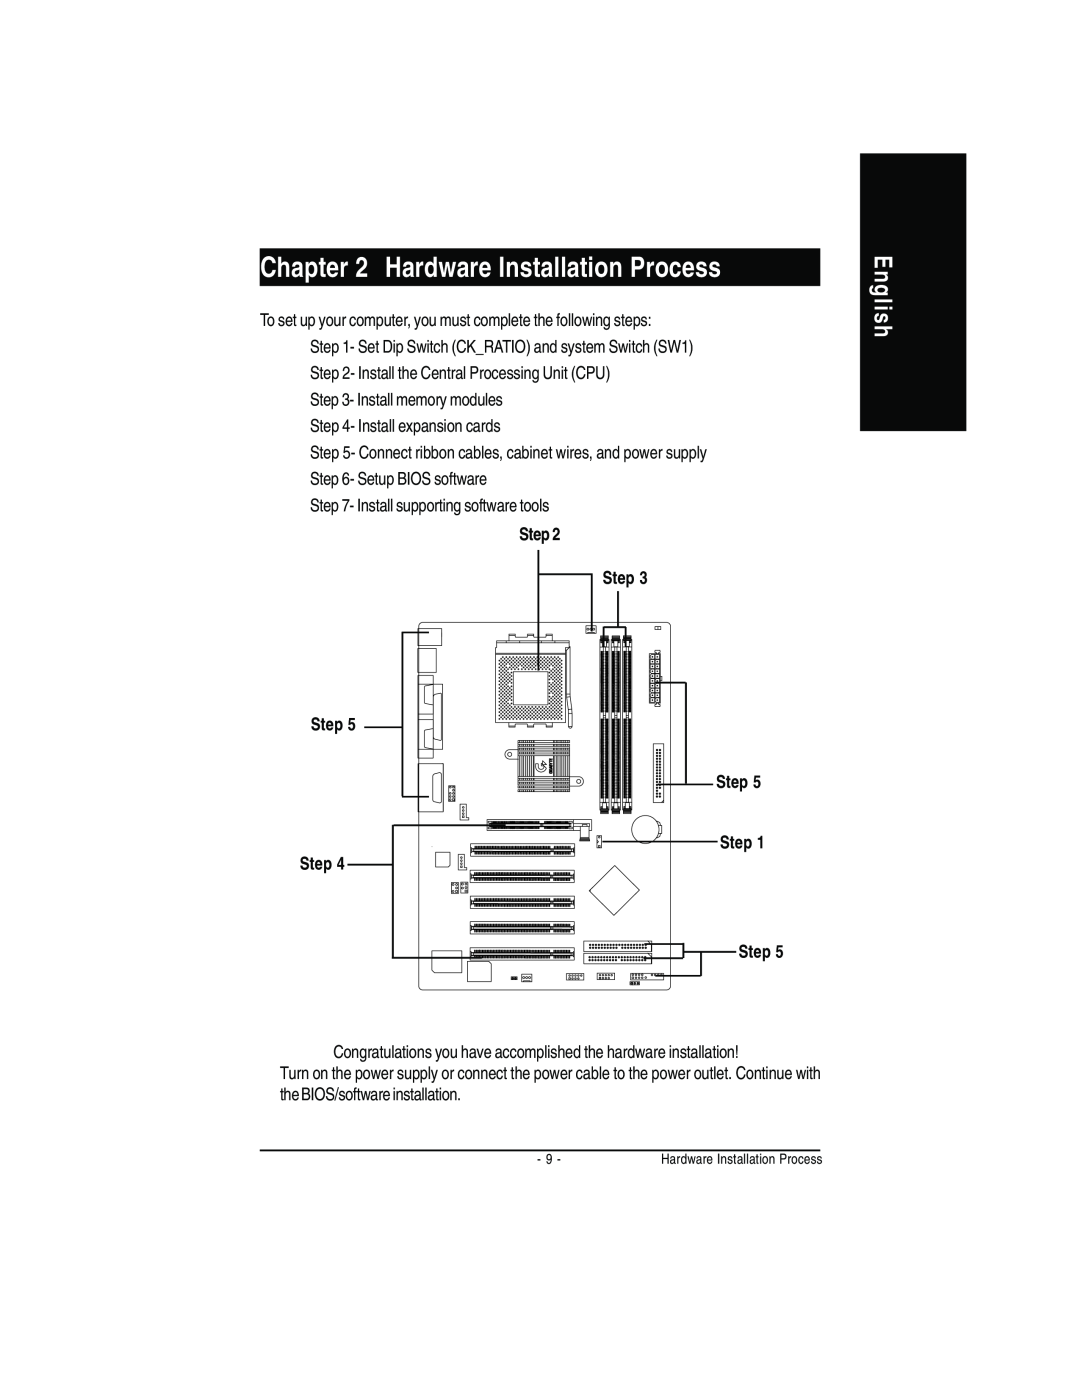 Gigabyte GA-7VA manual Hardware Installation Process, English, Step Step Step 